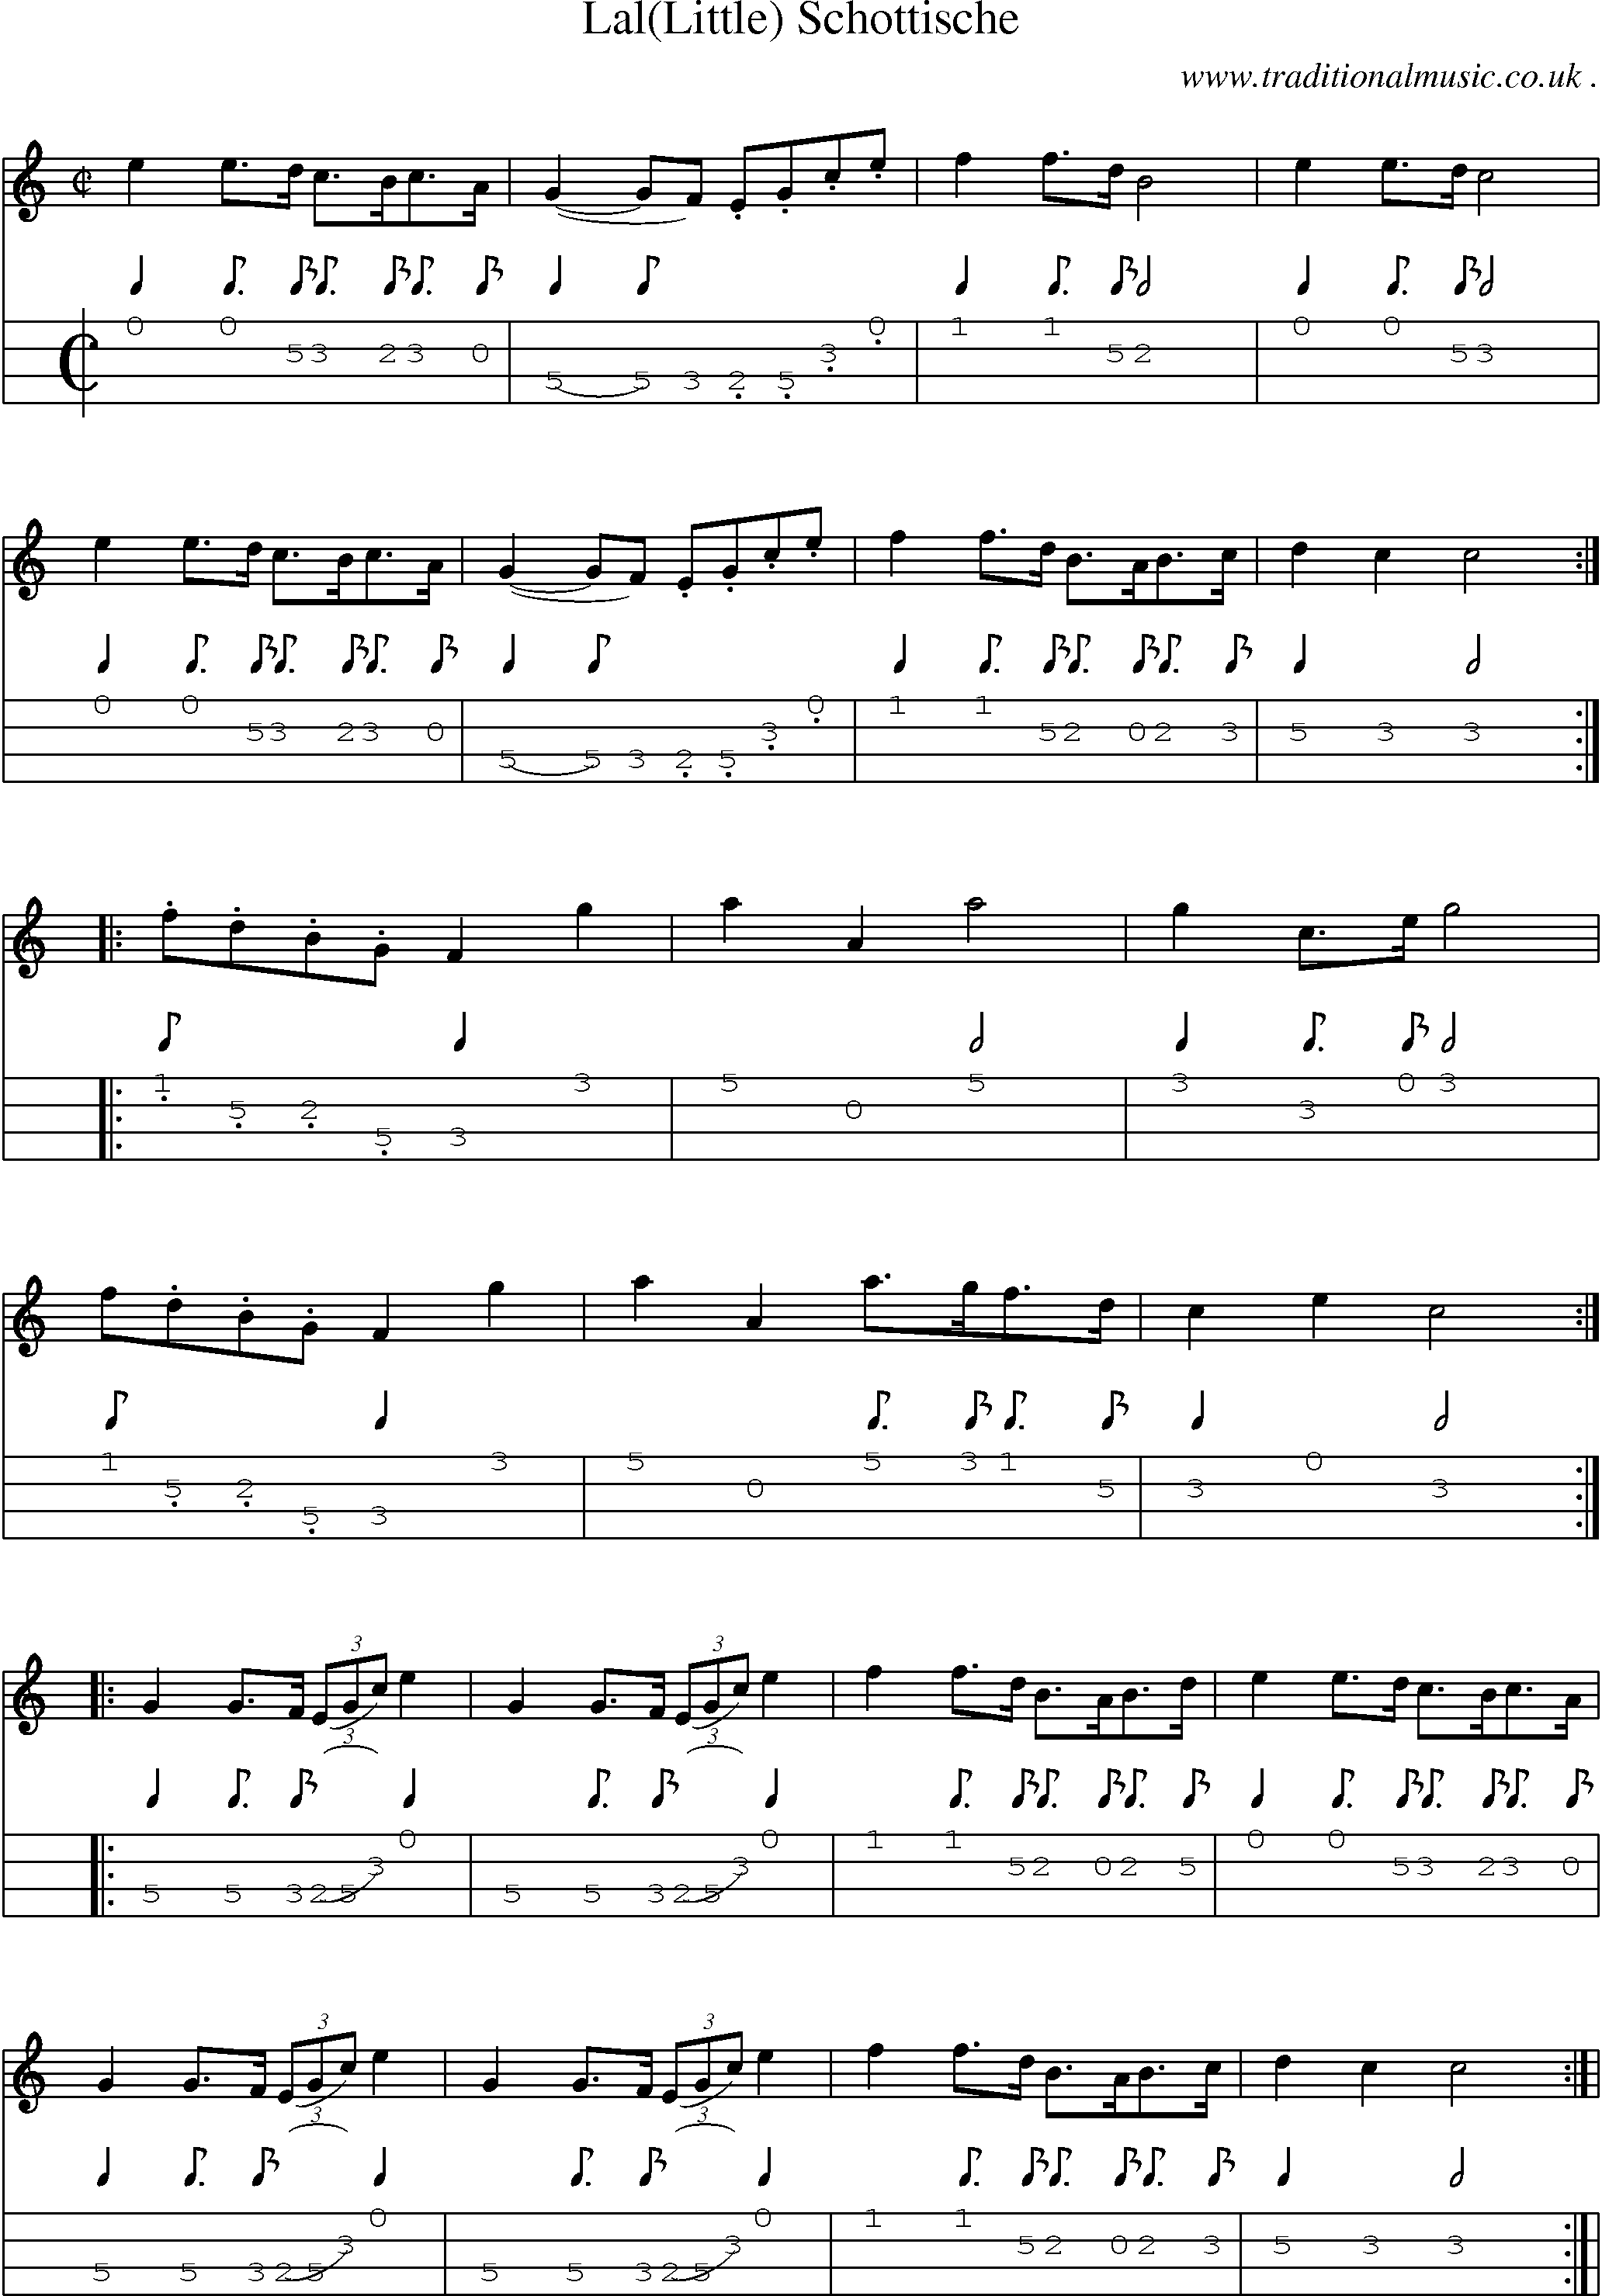 Sheet-Music and Mandolin Tabs for Lal(little) Schottische